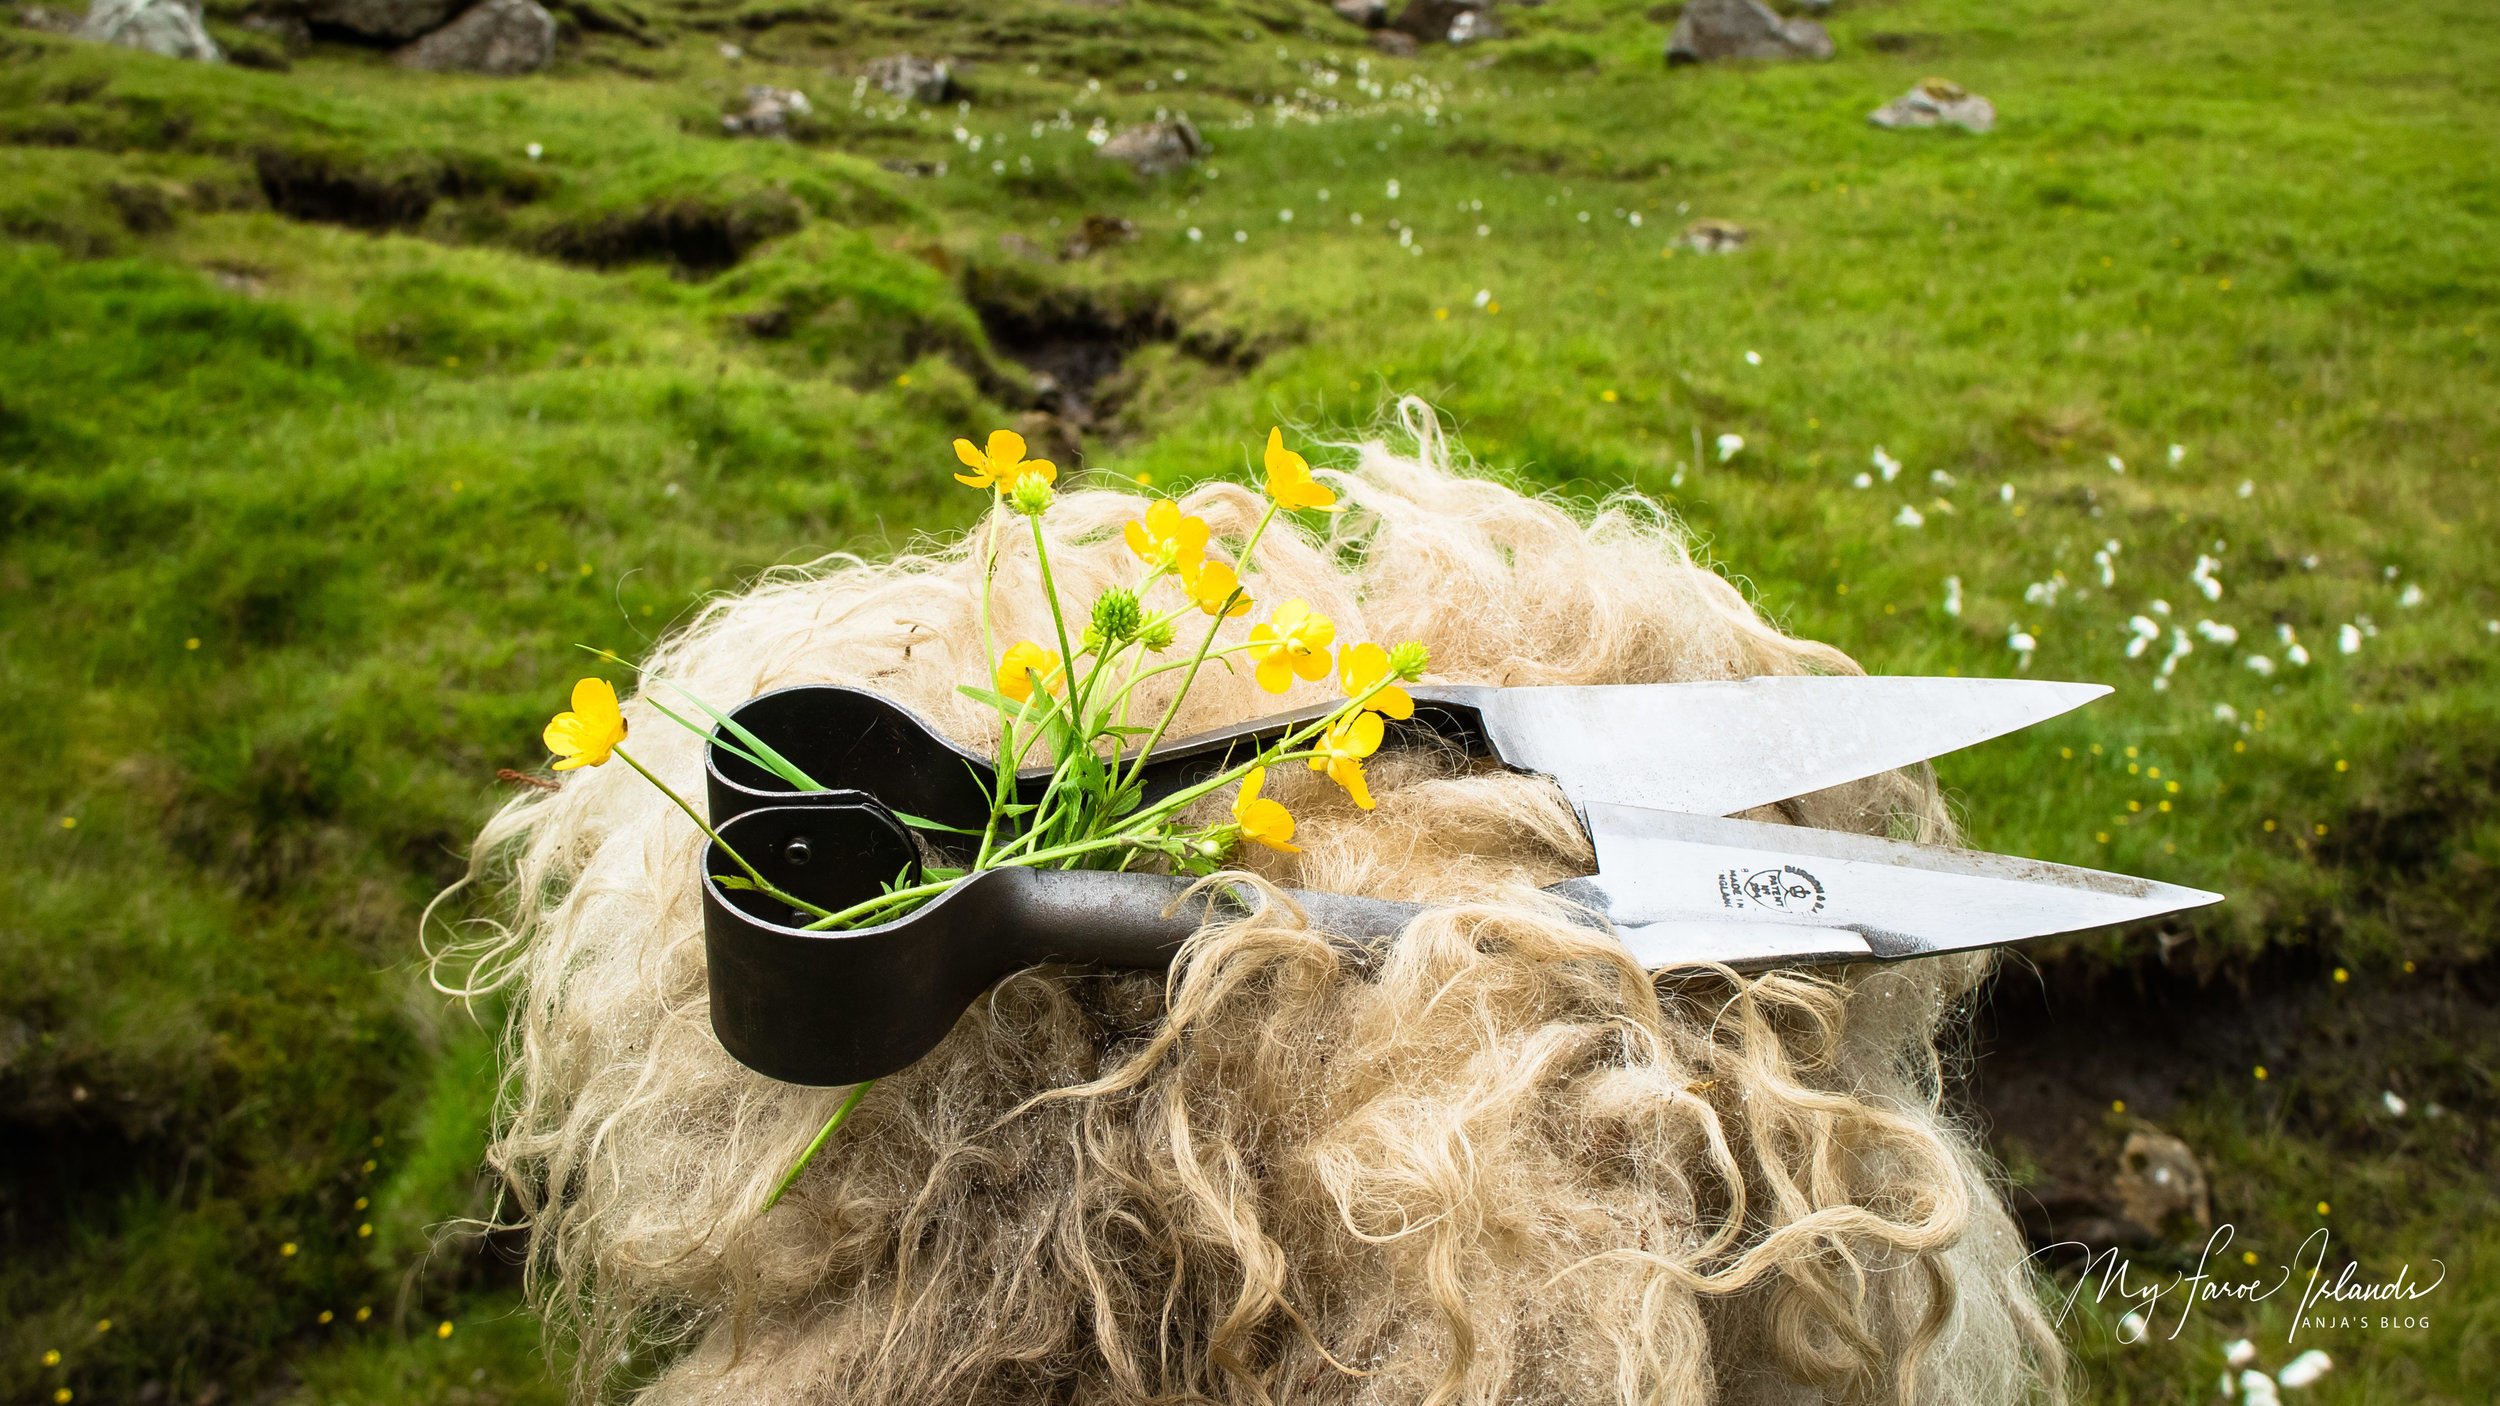 Blade Shears 9 © My Faroe Islands, Anja Mazuhn  (1 von 1).jpg